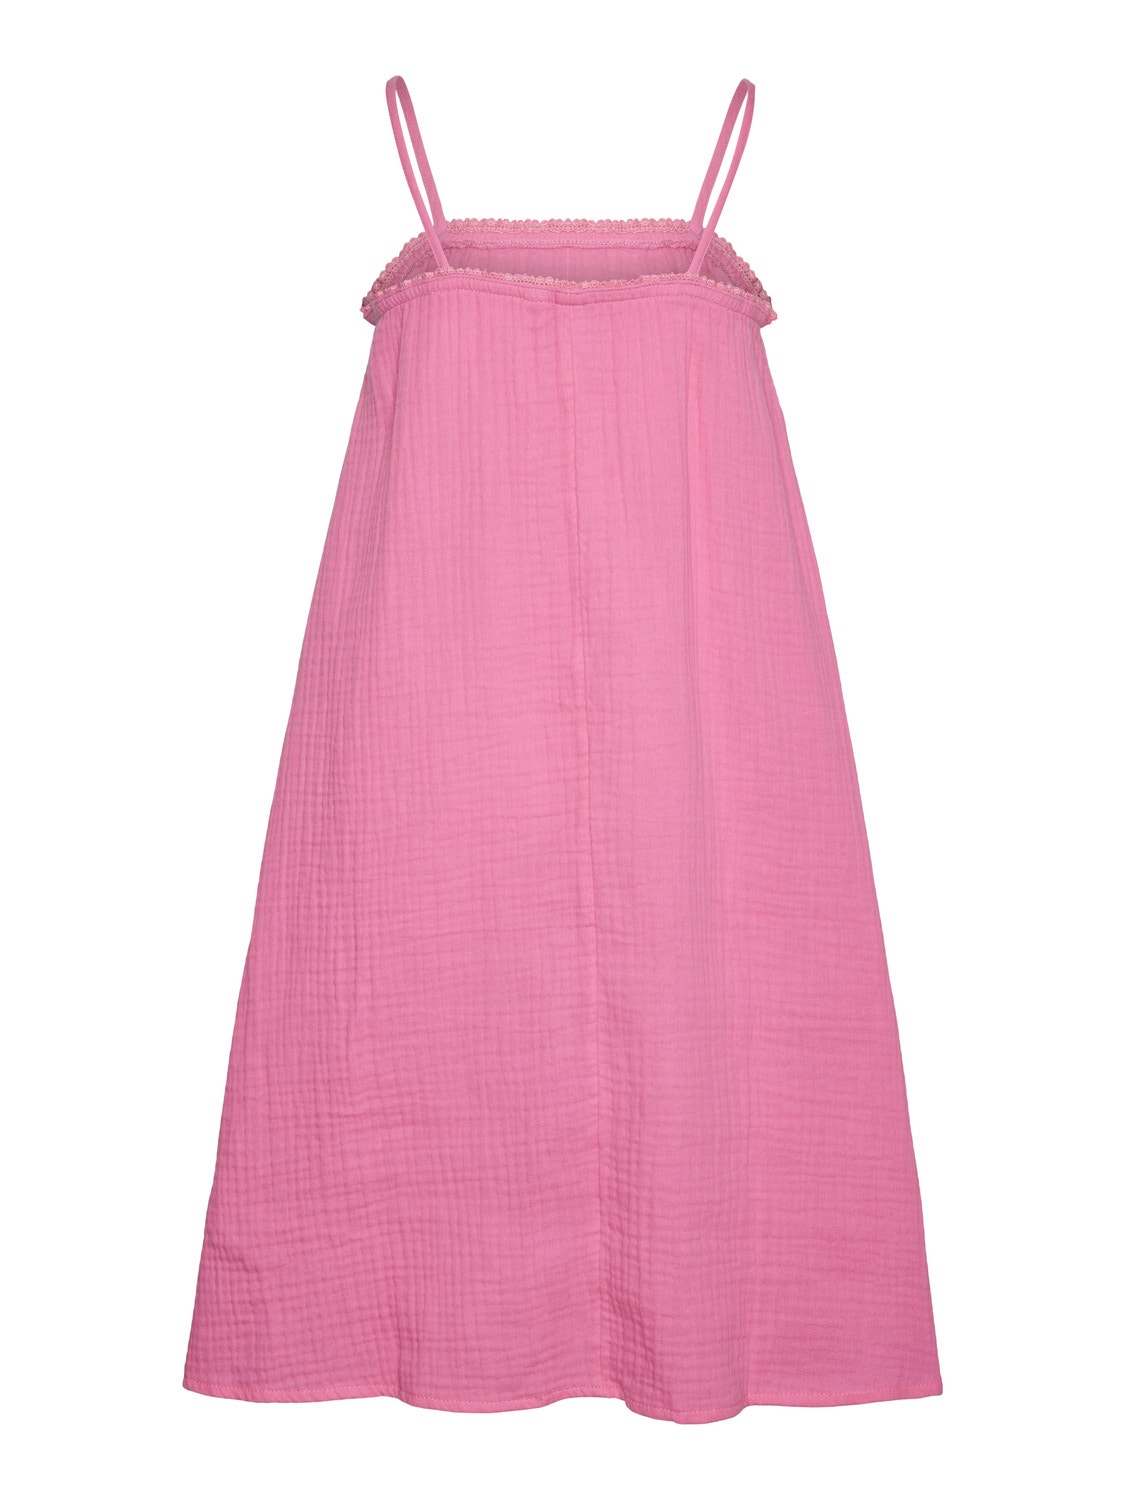 Vero Moda VMNATALI Long dress -Pink Cosmos - 10304284